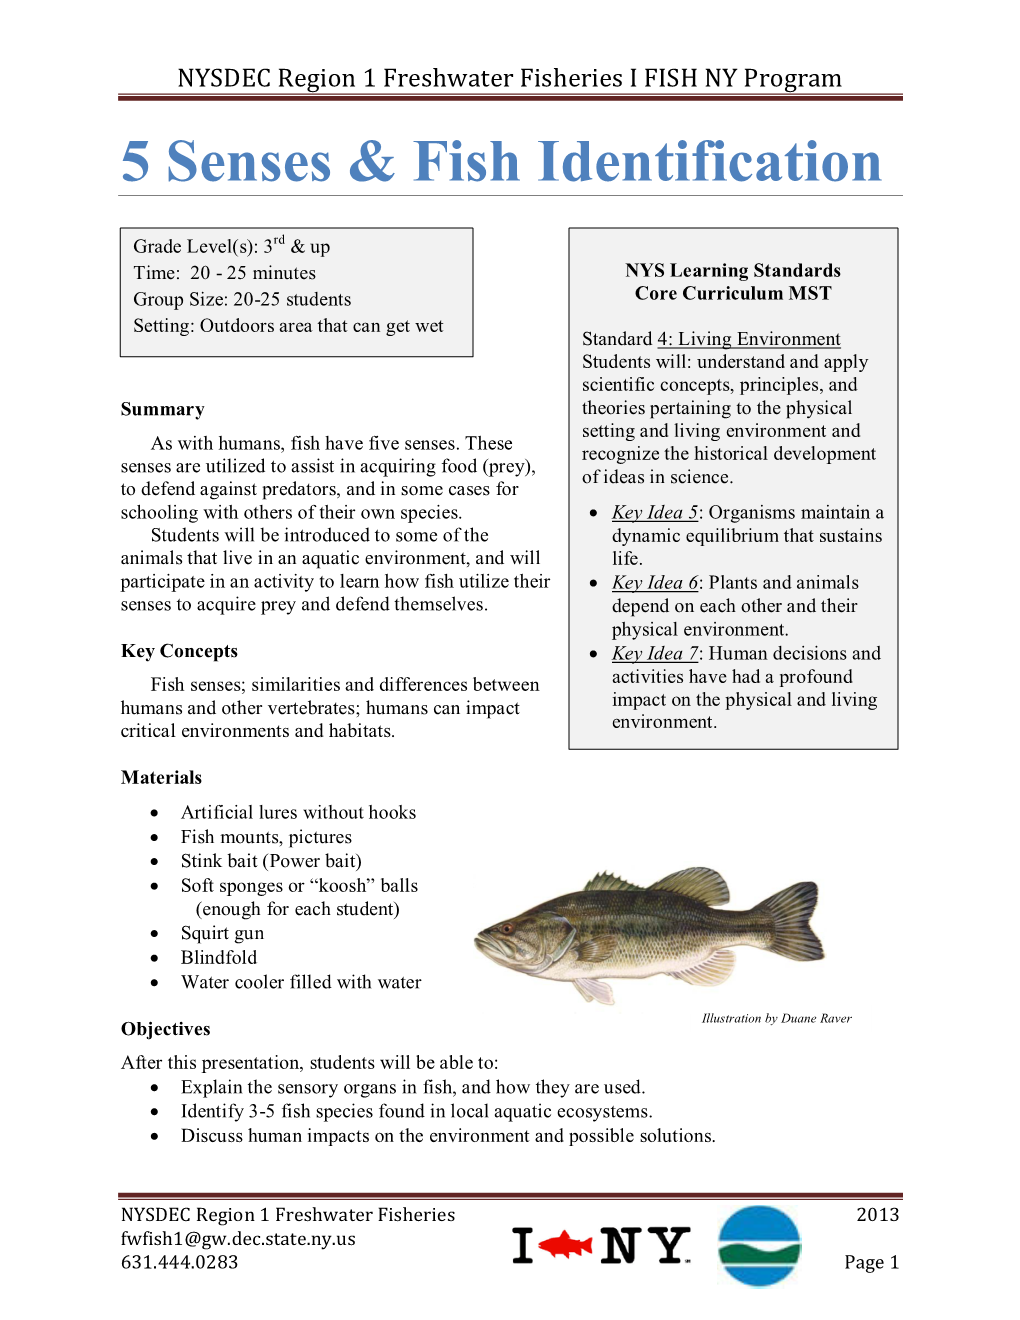 5 Senses & Fish Identification